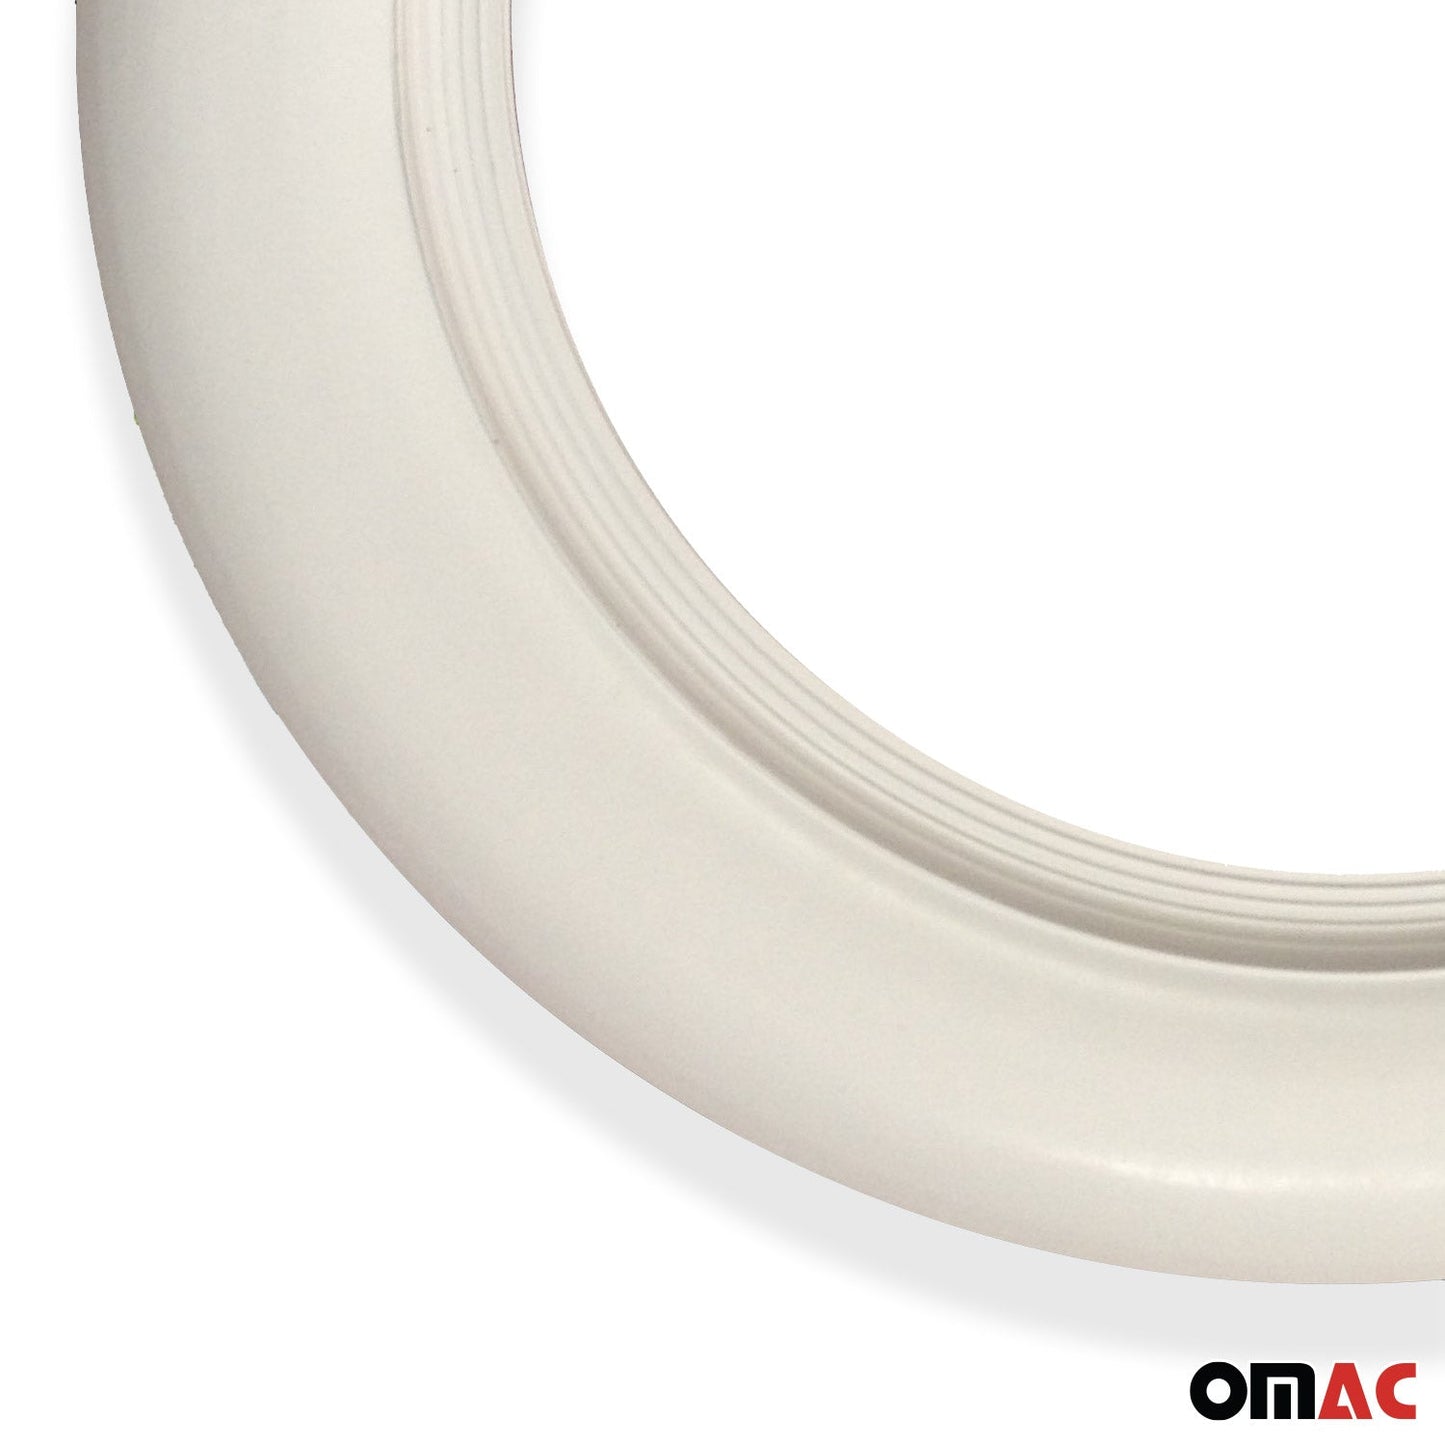 OMAC White Wall Tire Insert 13" Band Portawall Rims Sidewall Rubber Ring Set 4 Pcs 96TW013WW